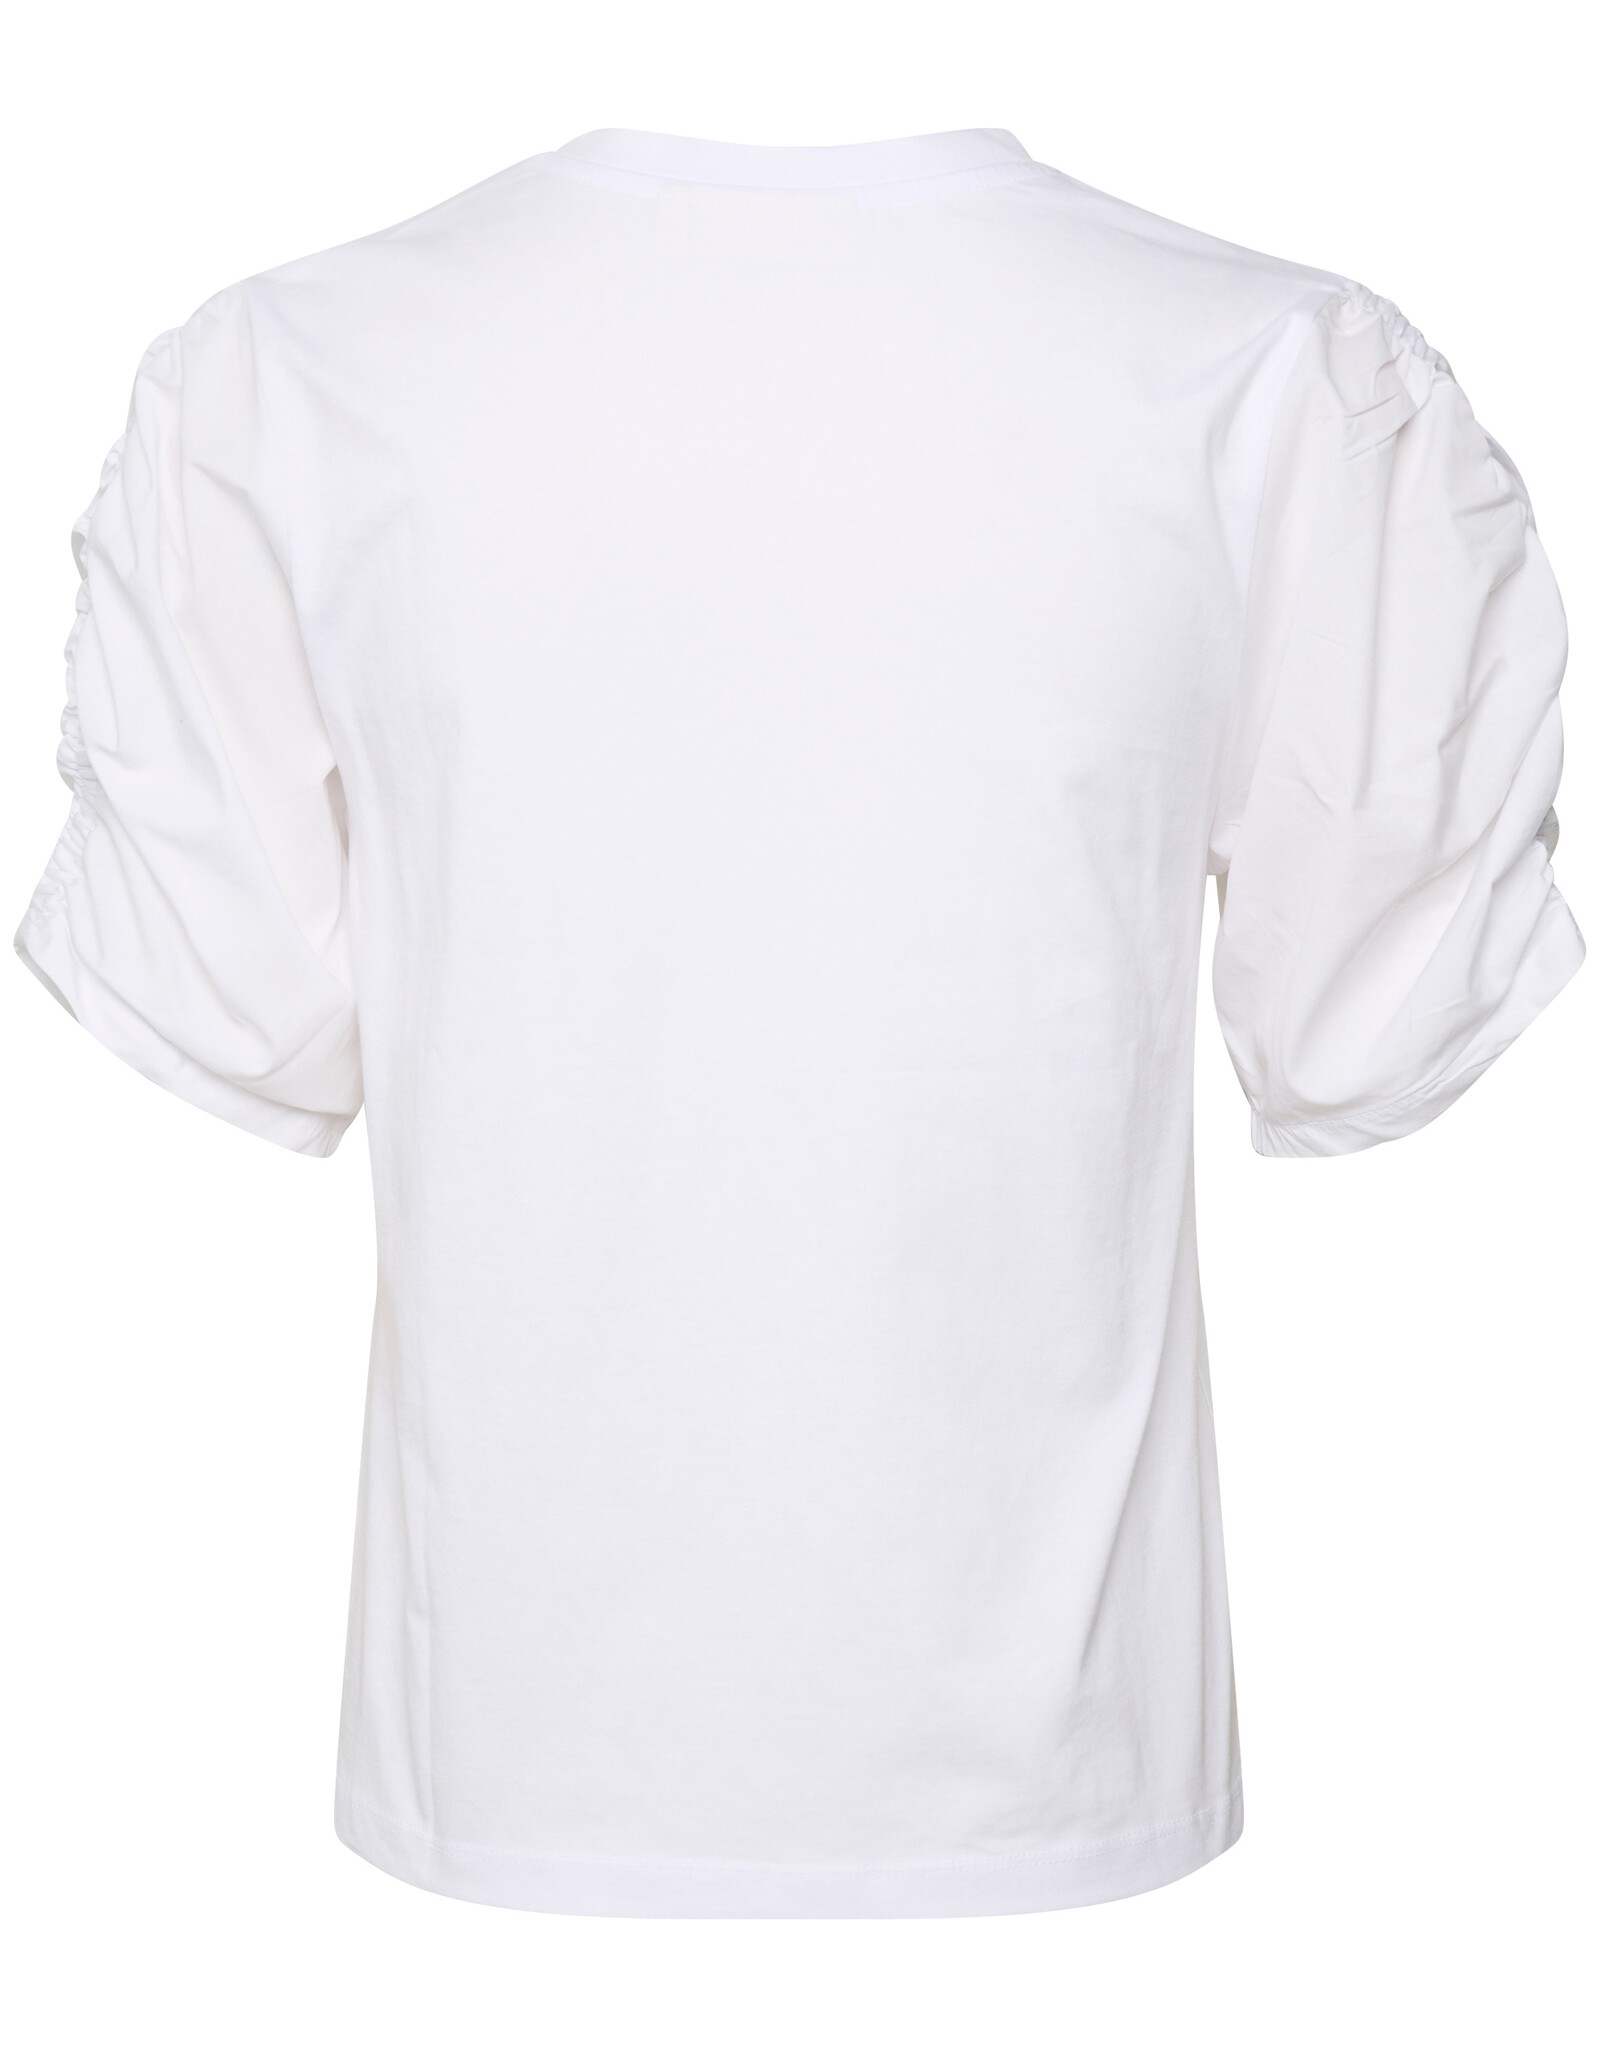 InWear Payana Woven Trim T-Shirt Pure White